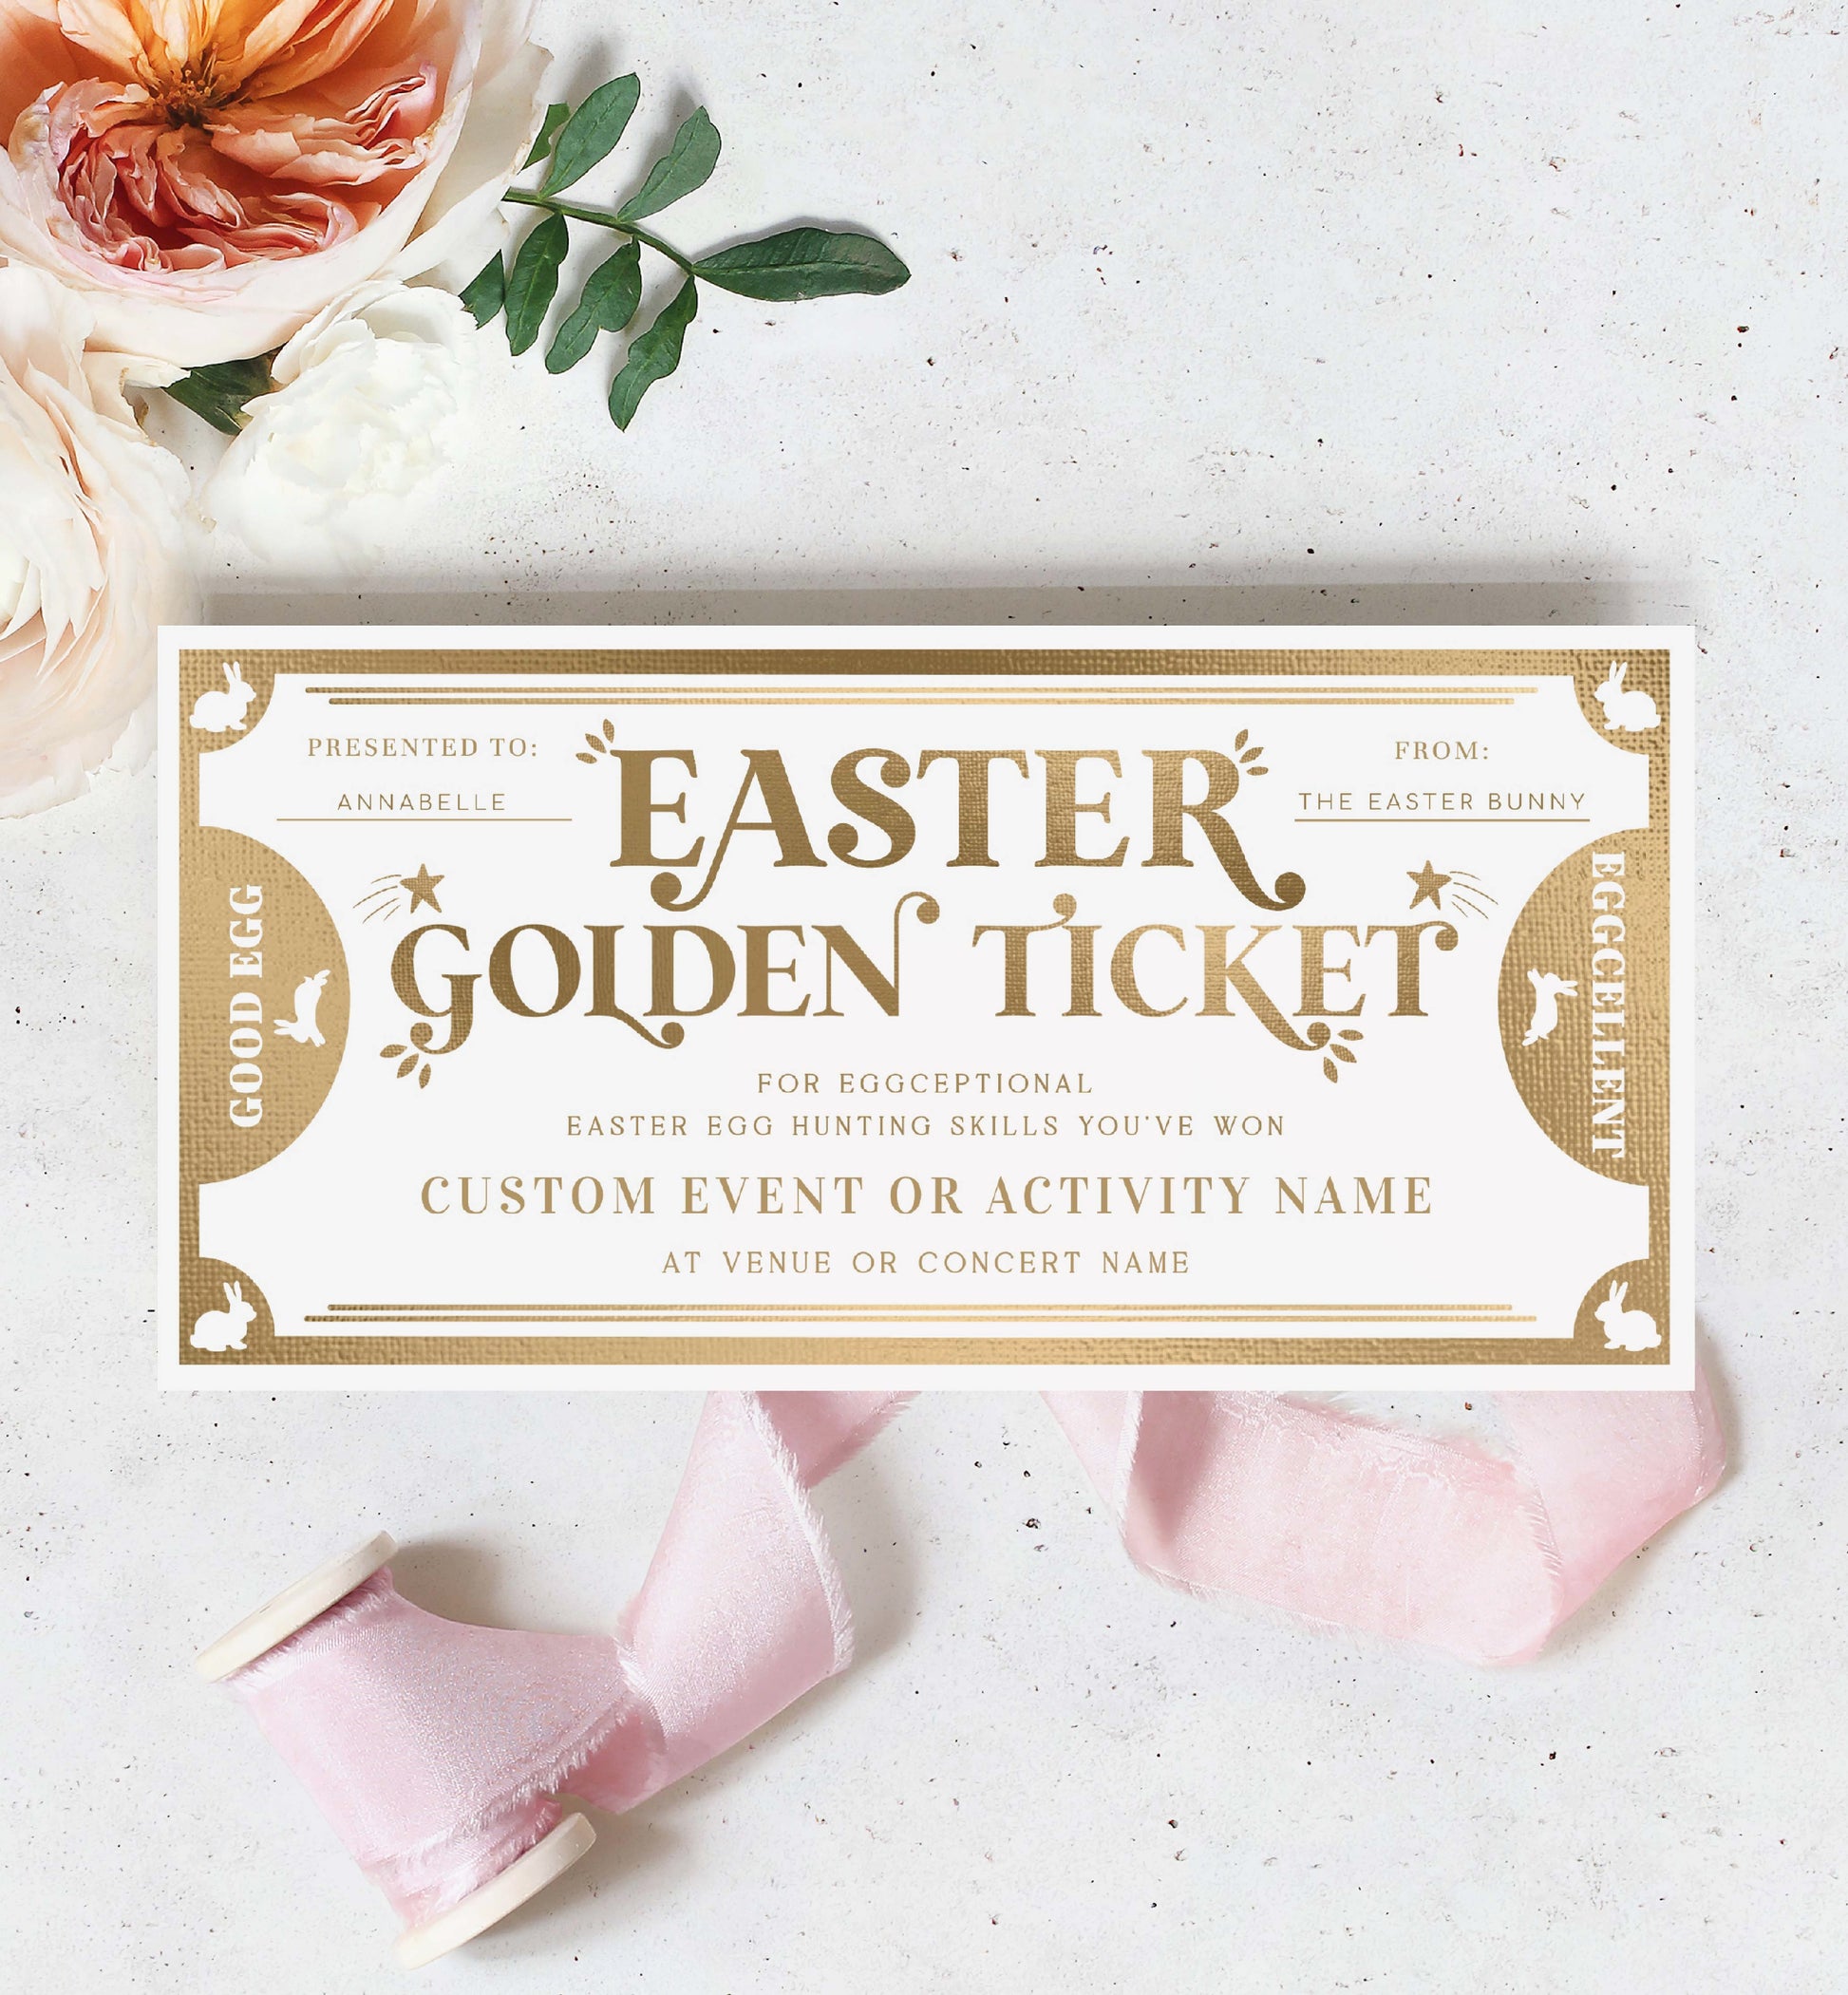 Easter Egg Hunt Gift Voucher Template, Printable Gift Certificate, Easter Golden Ticket, Easter Present, Easter Gift Coupon